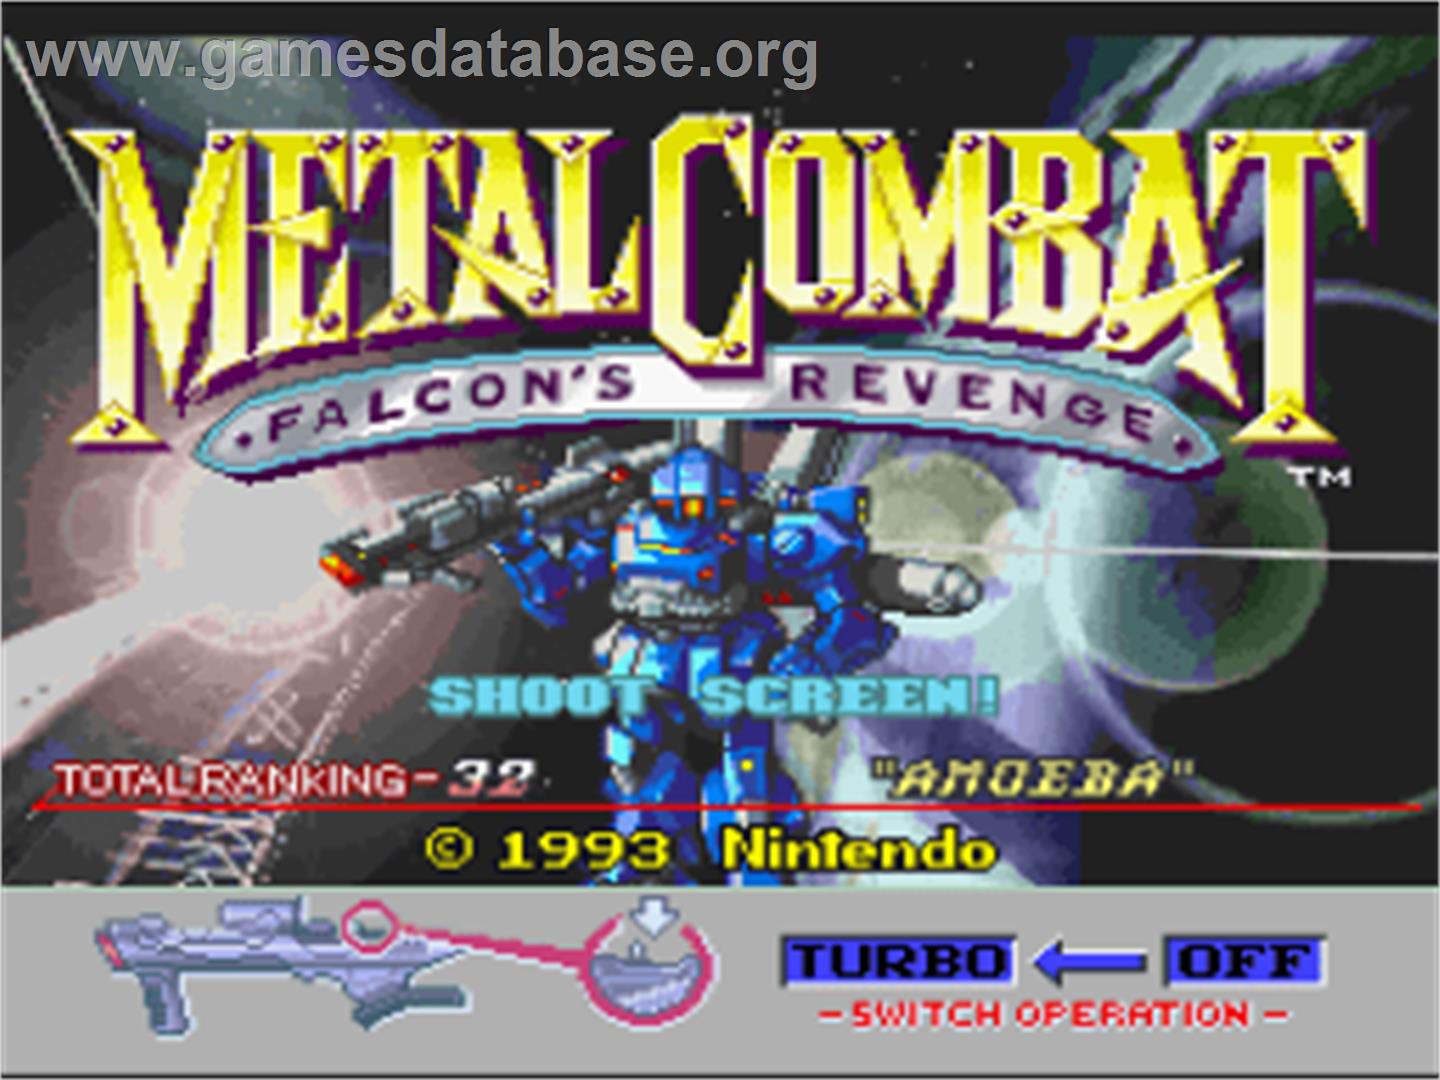 Metal Combat: Falcon's Revenge - Nintendo SNES - Artwork - Title Screen